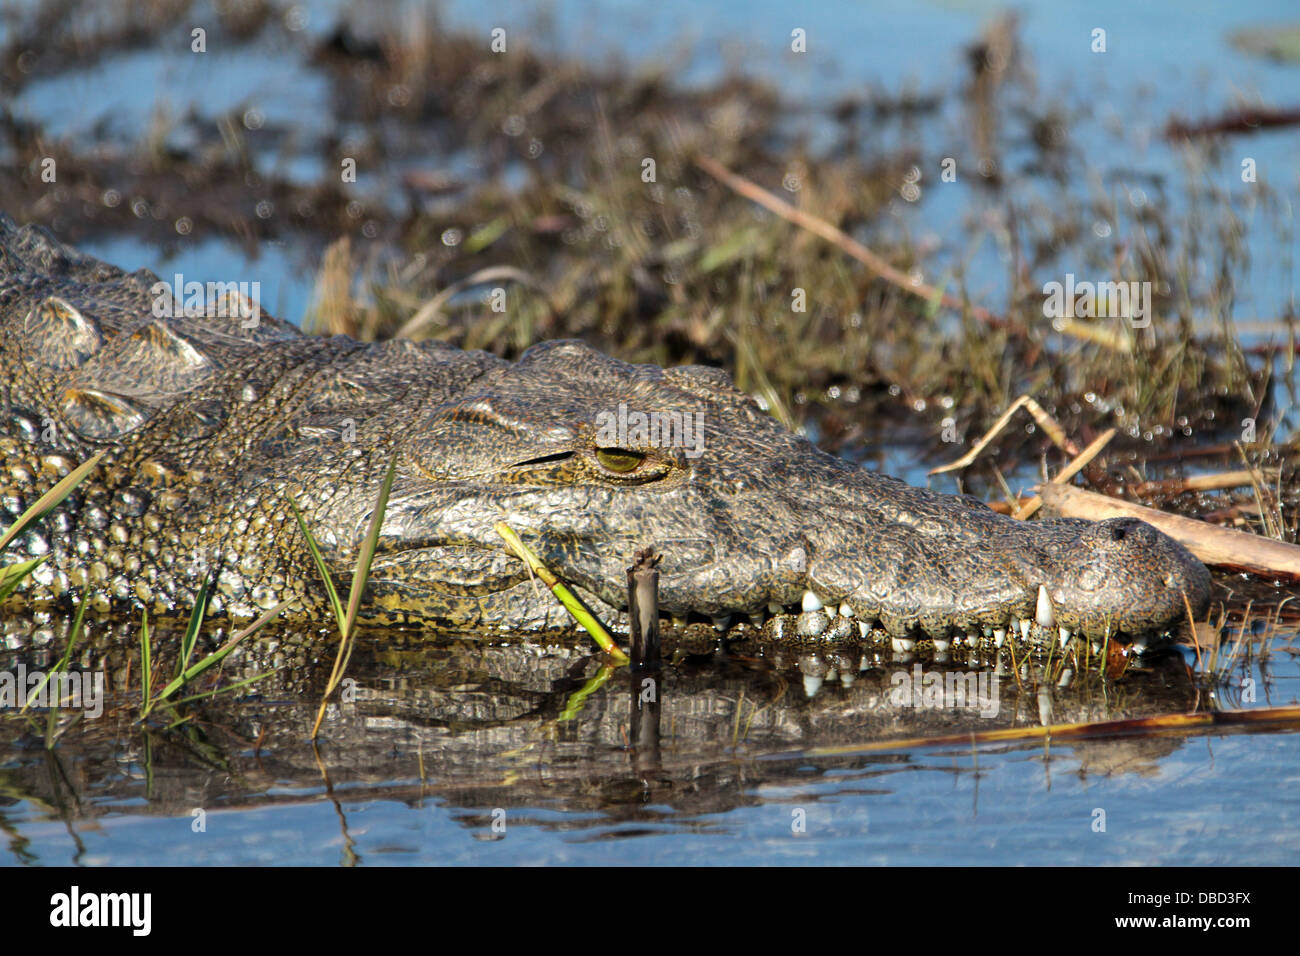 A nile croc basking on a sandbank Stock Photo